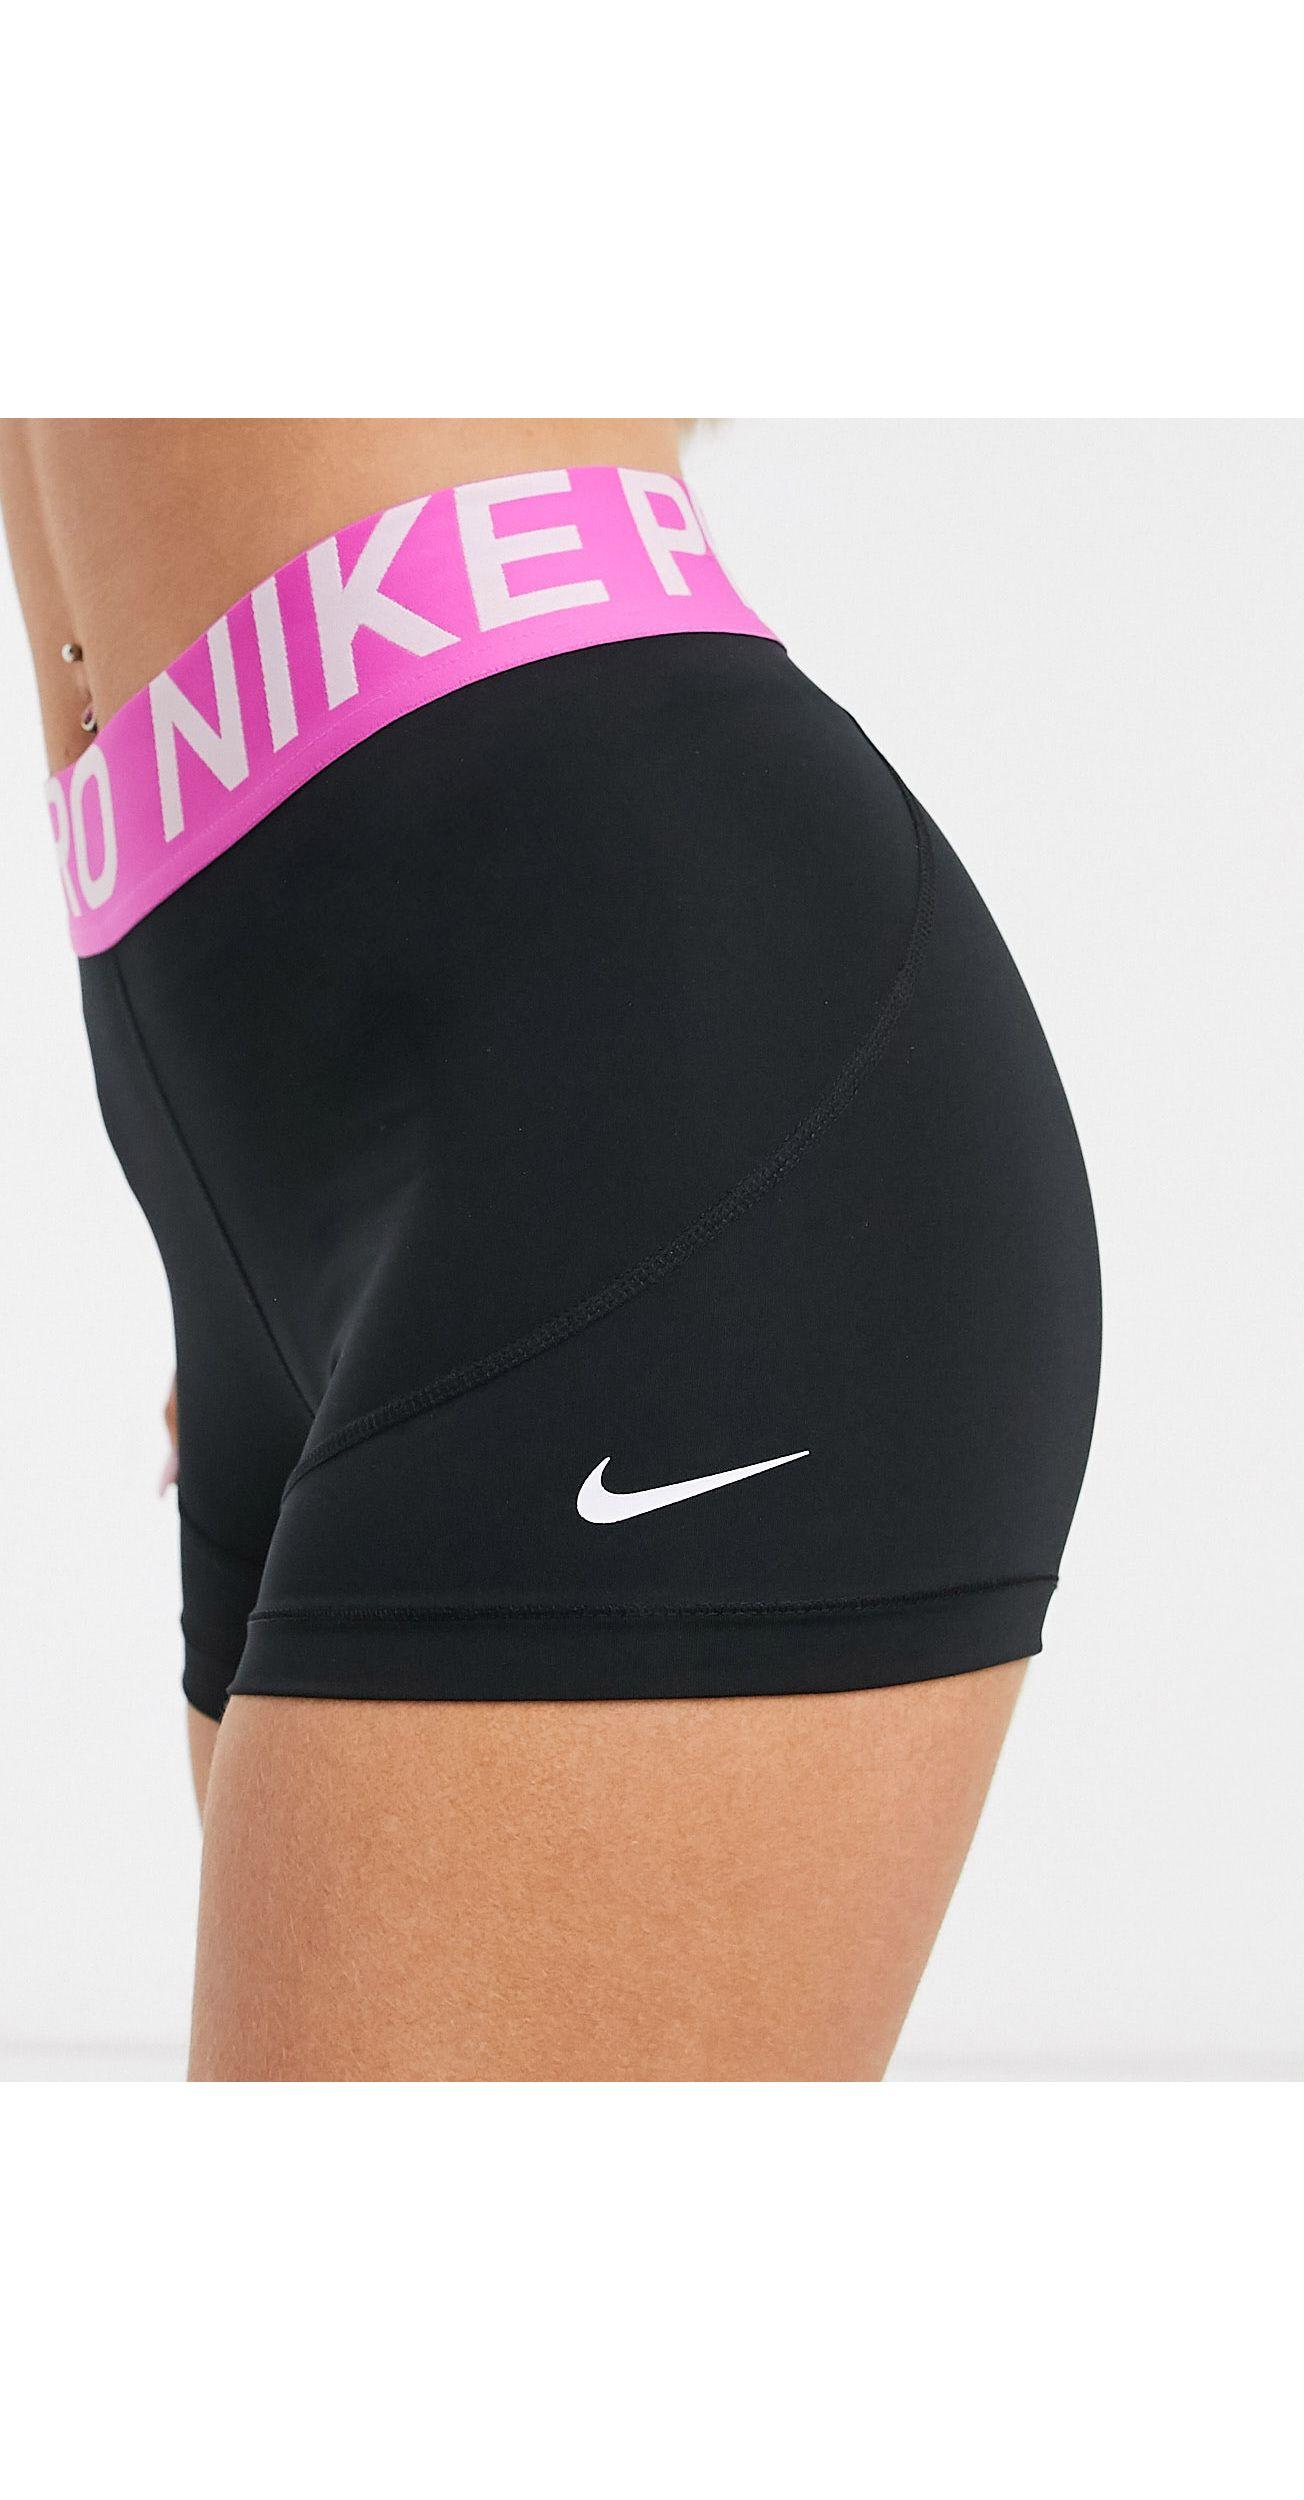 Nike Pro Booty Shorts in Black | Lyst